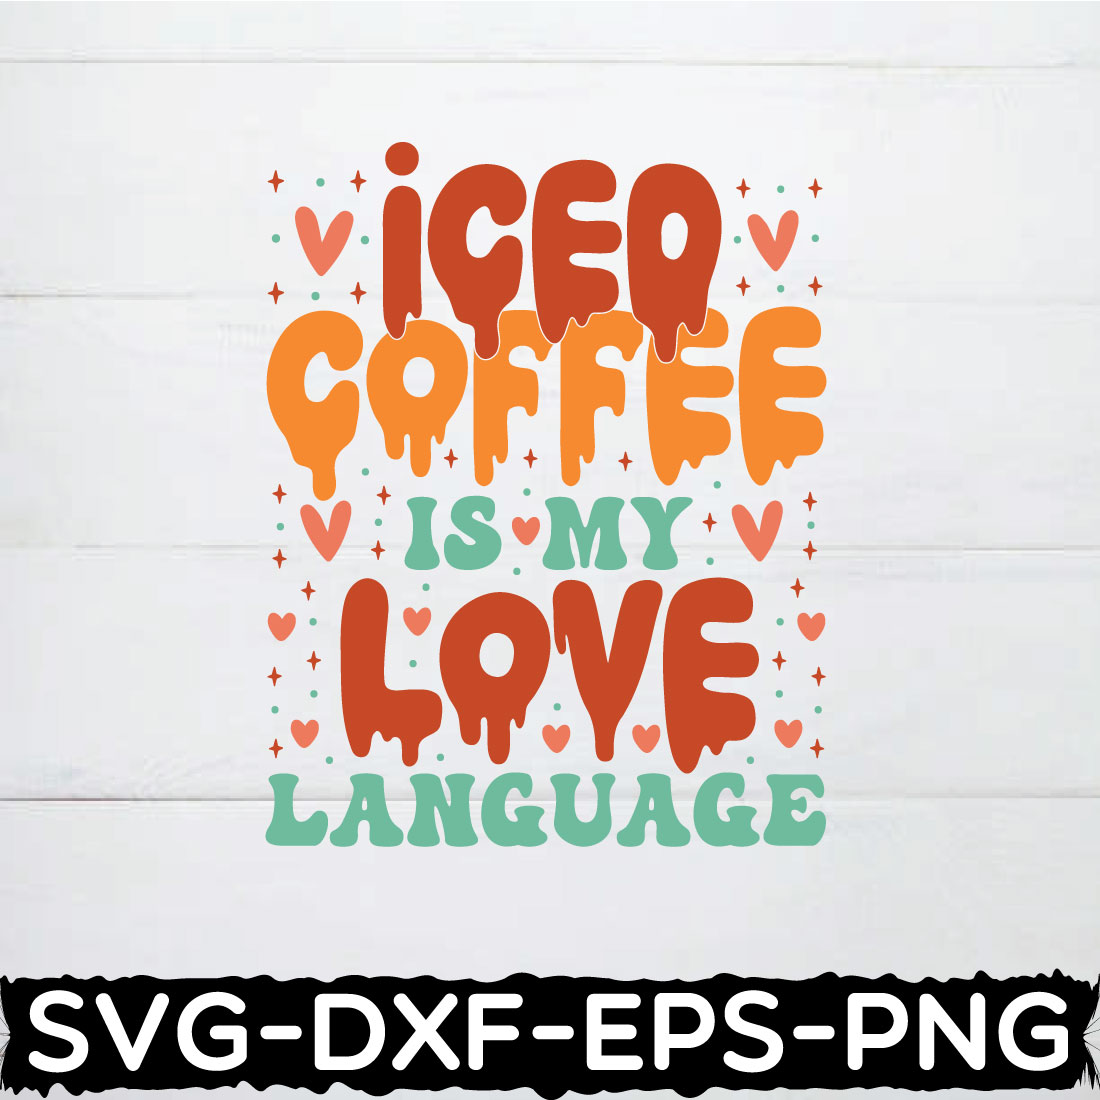 iced coffee is my love language retro cover image.